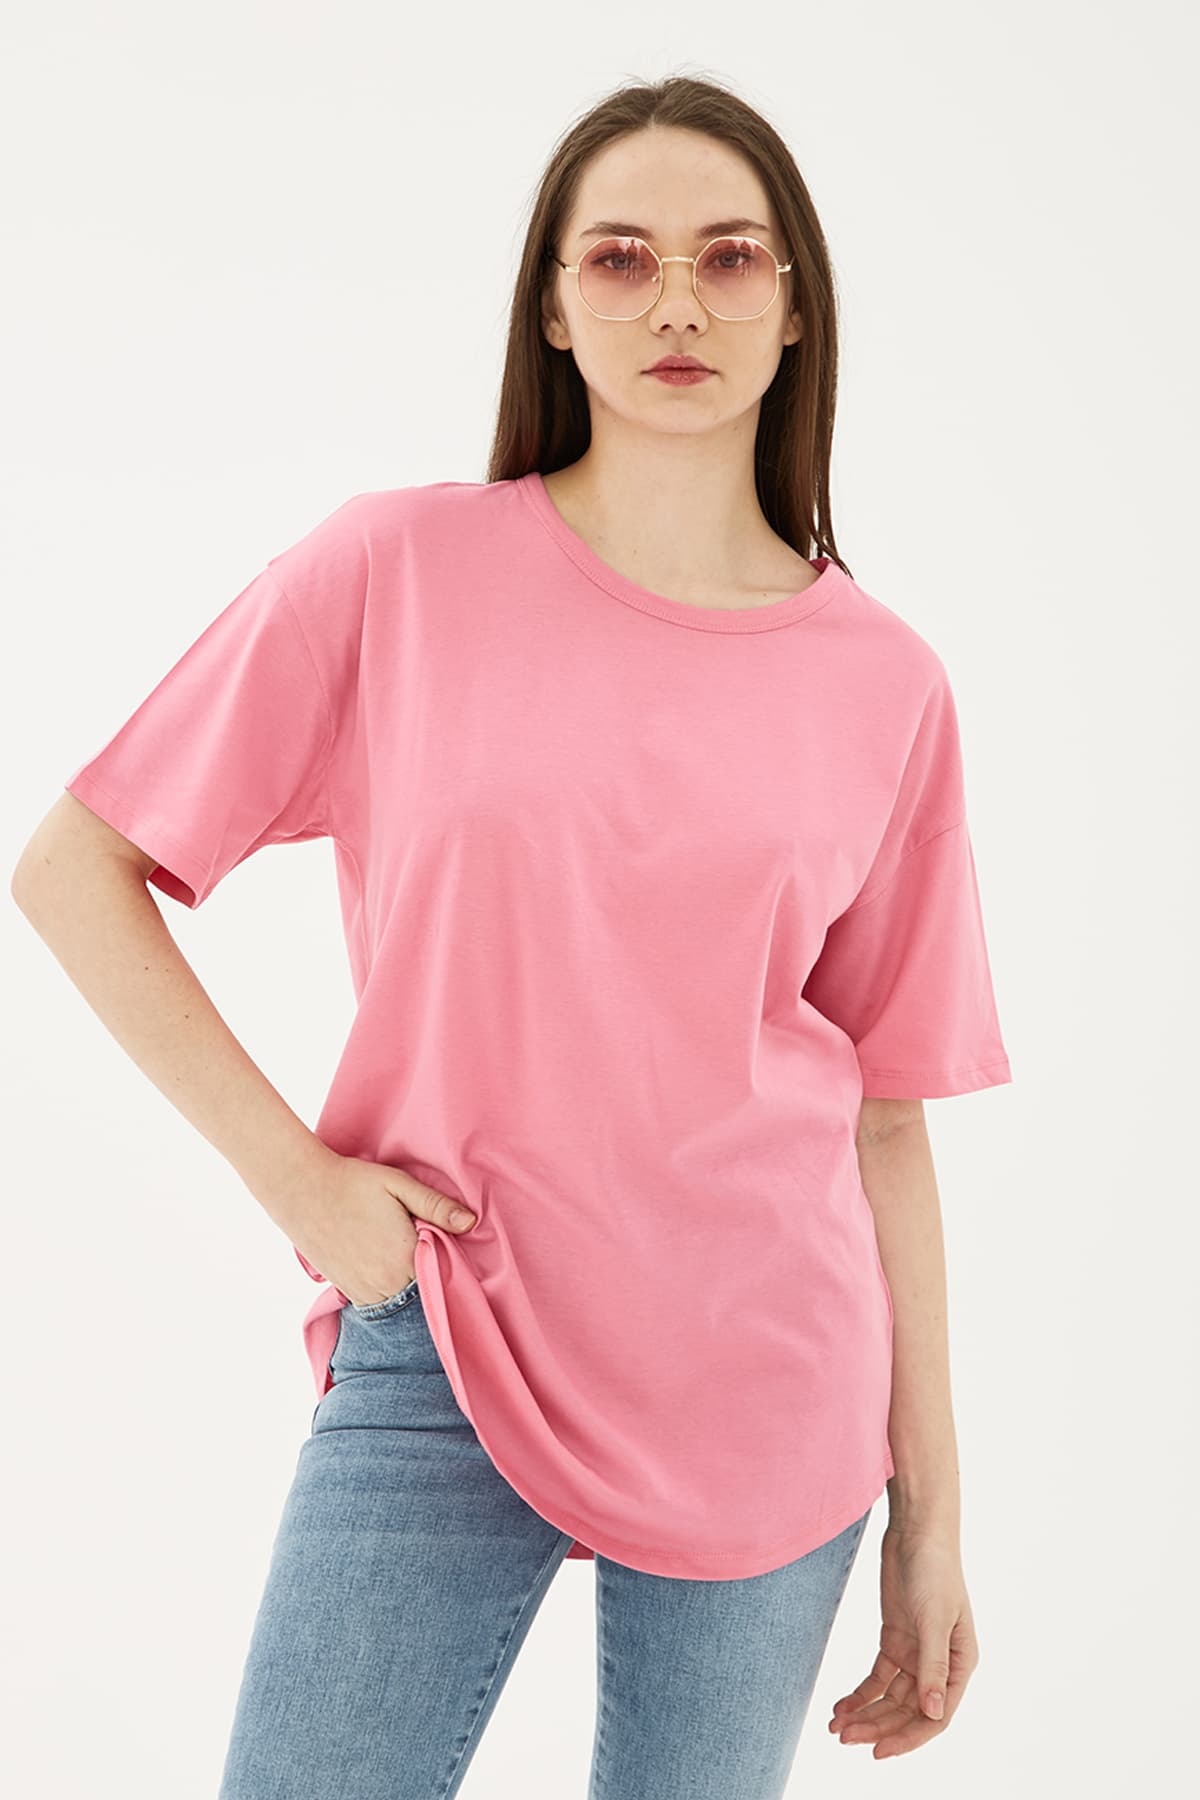 T-Shirt Pembe / Pink | Markasız